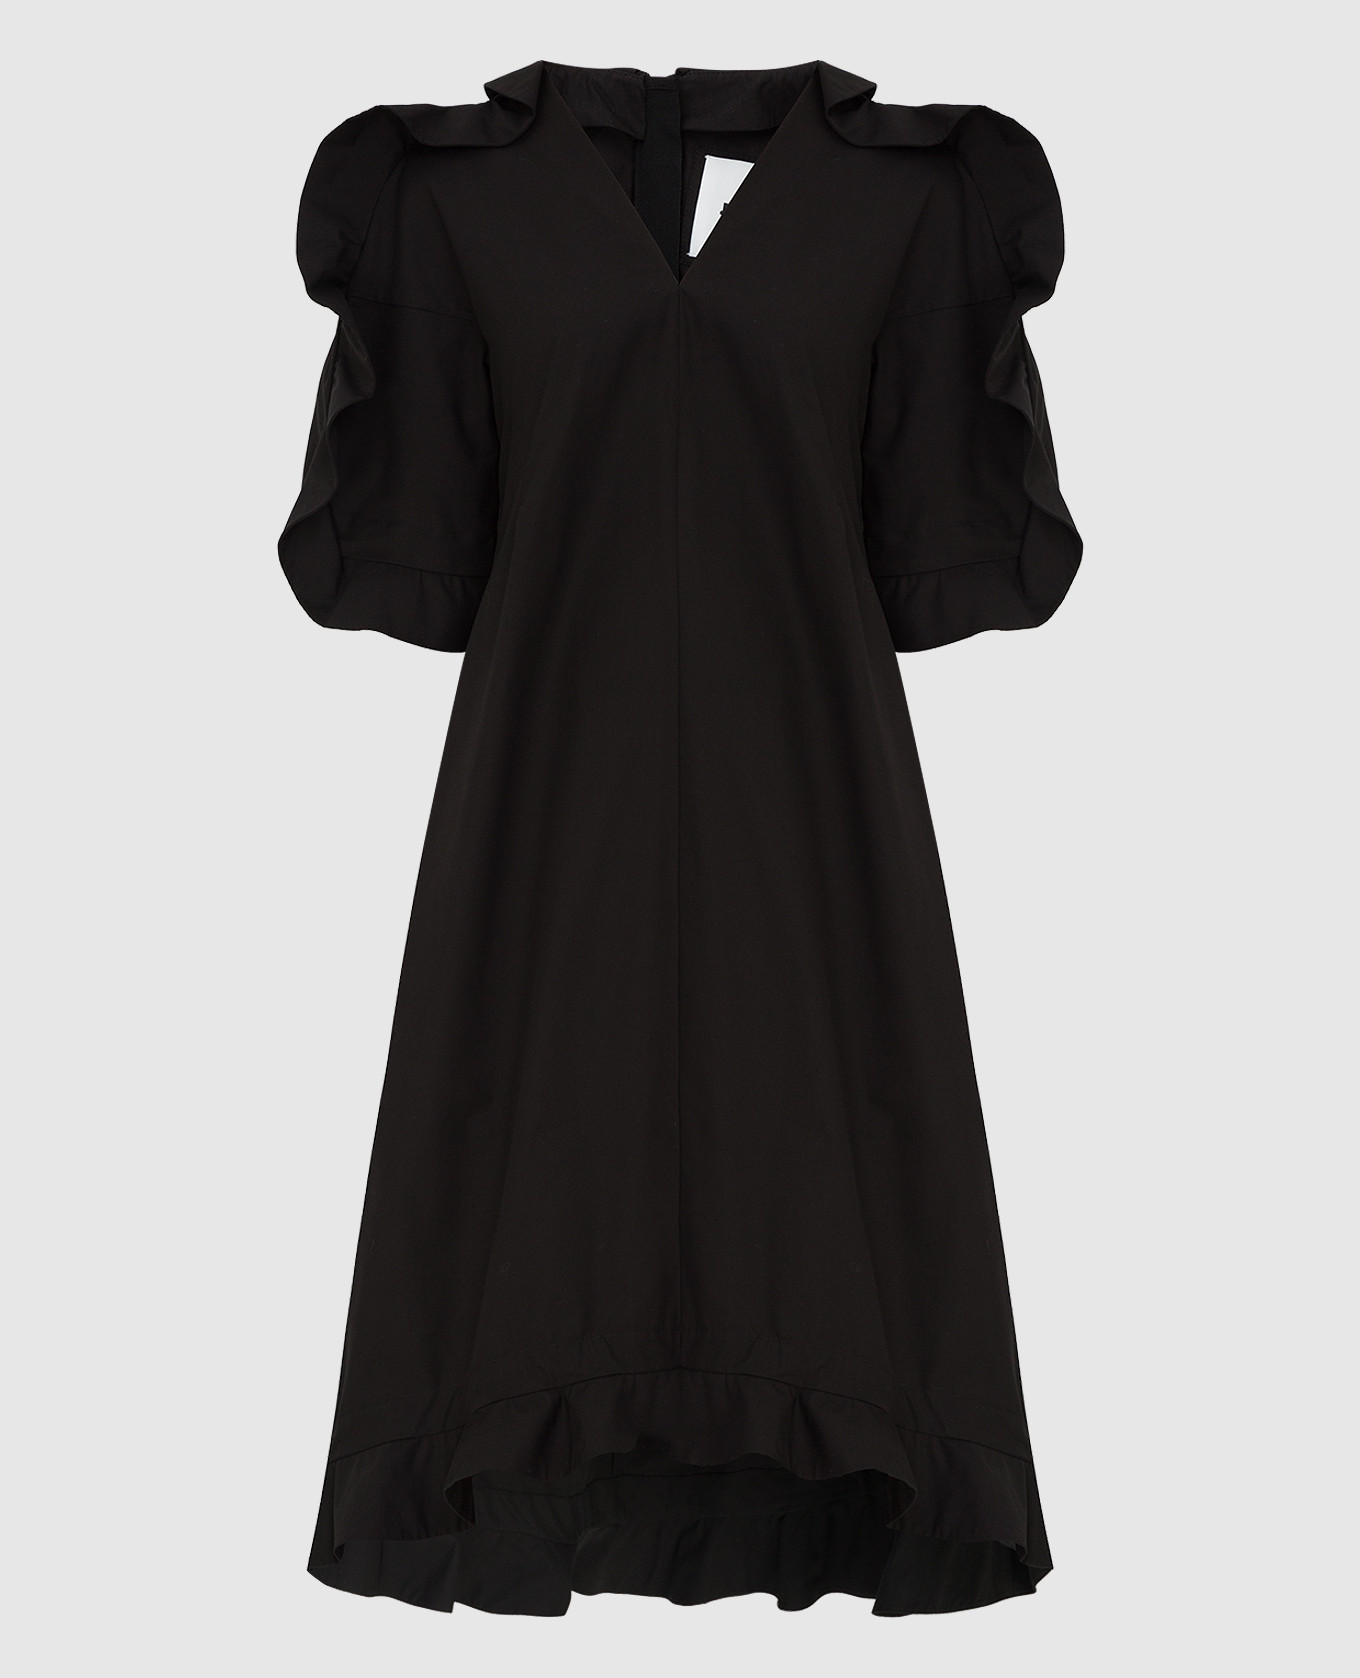 Black dress with frills